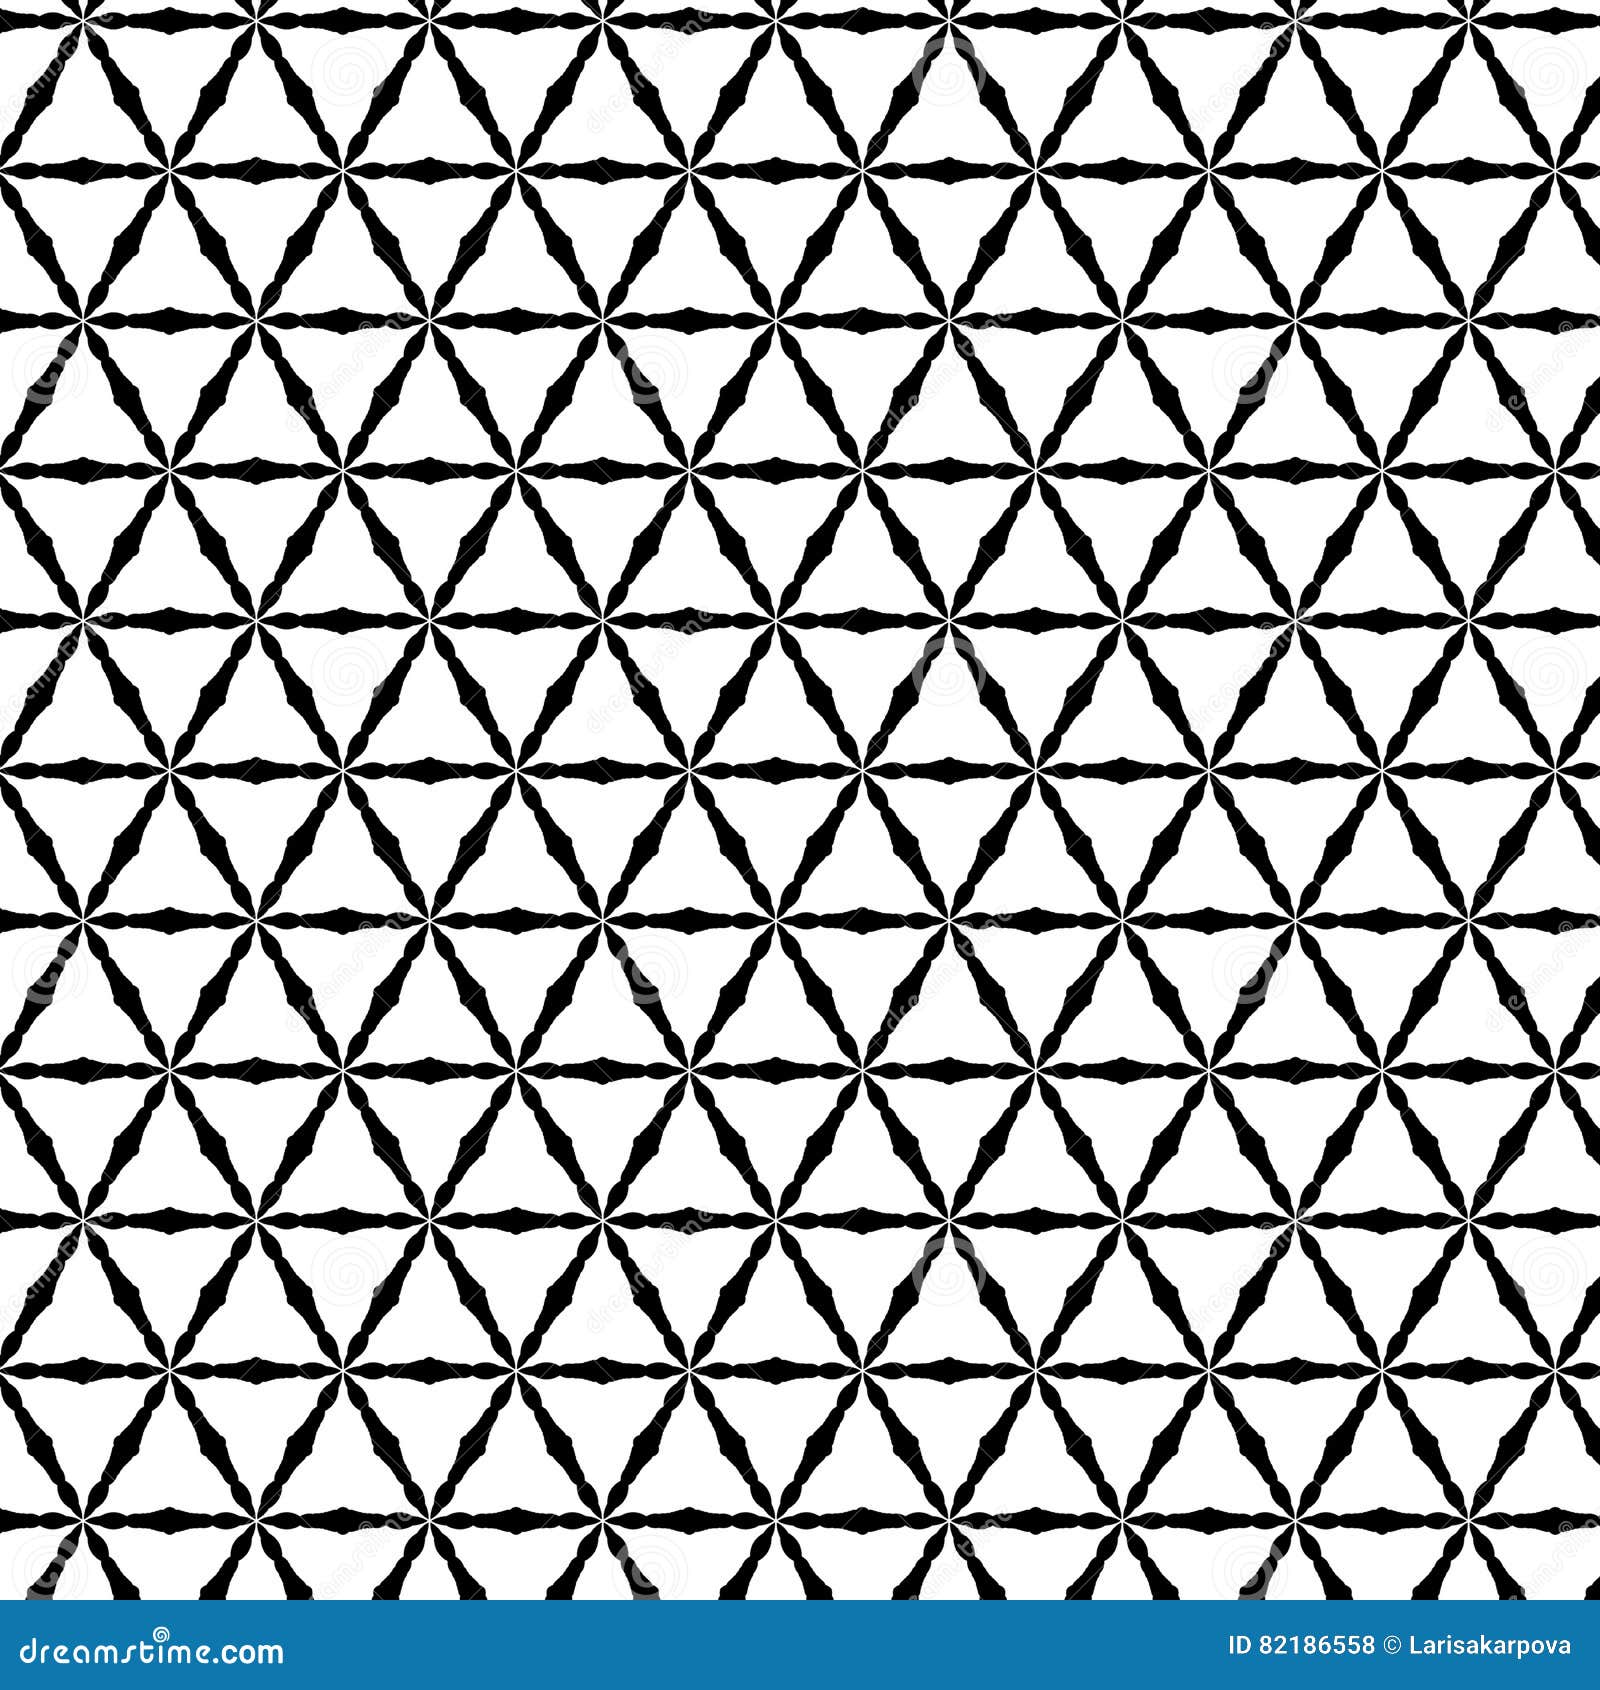 primitive geometria sacra retro pattern with lines and circles.